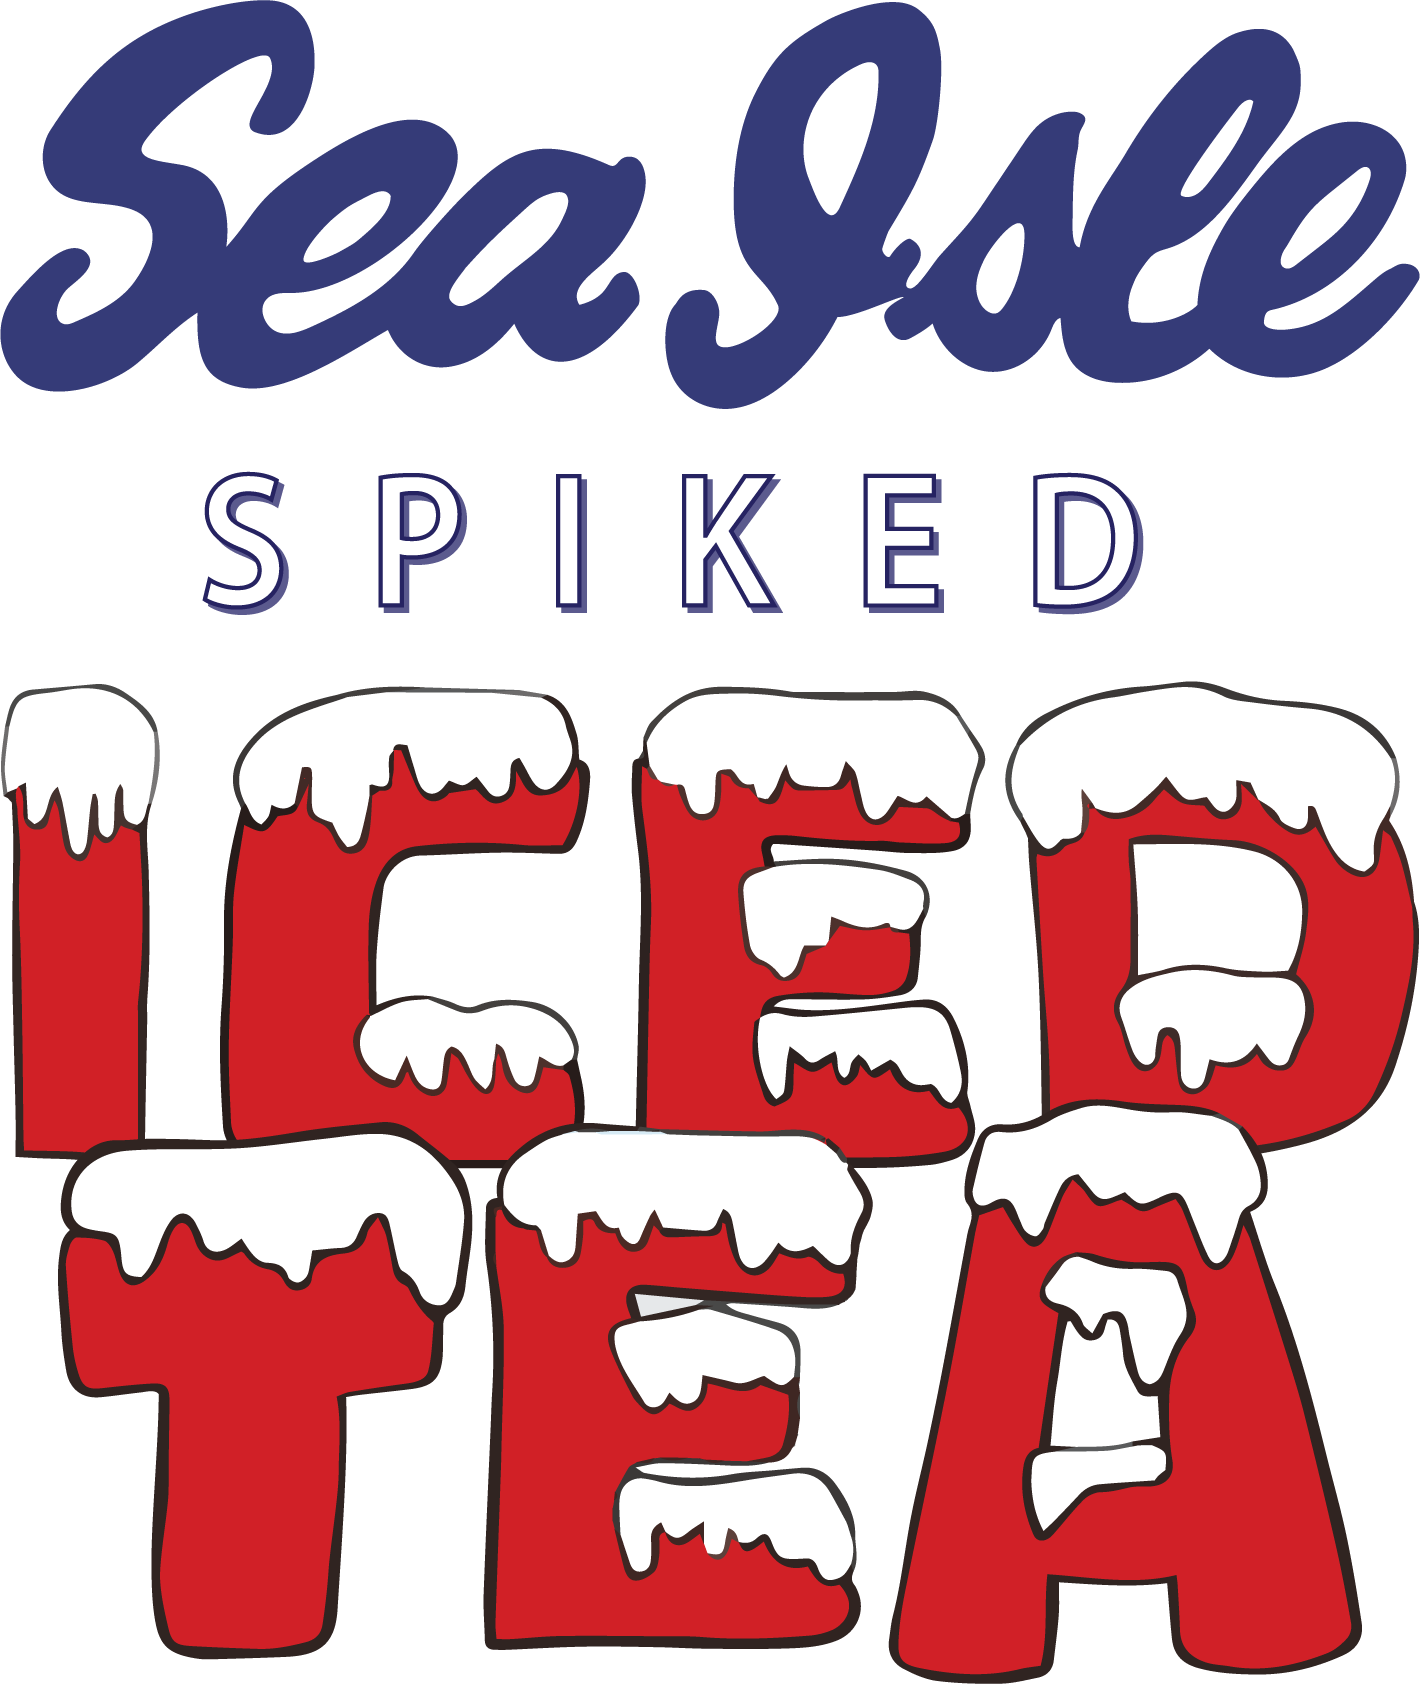 Sea Isle Spiked Iced Tea Official Merchandise